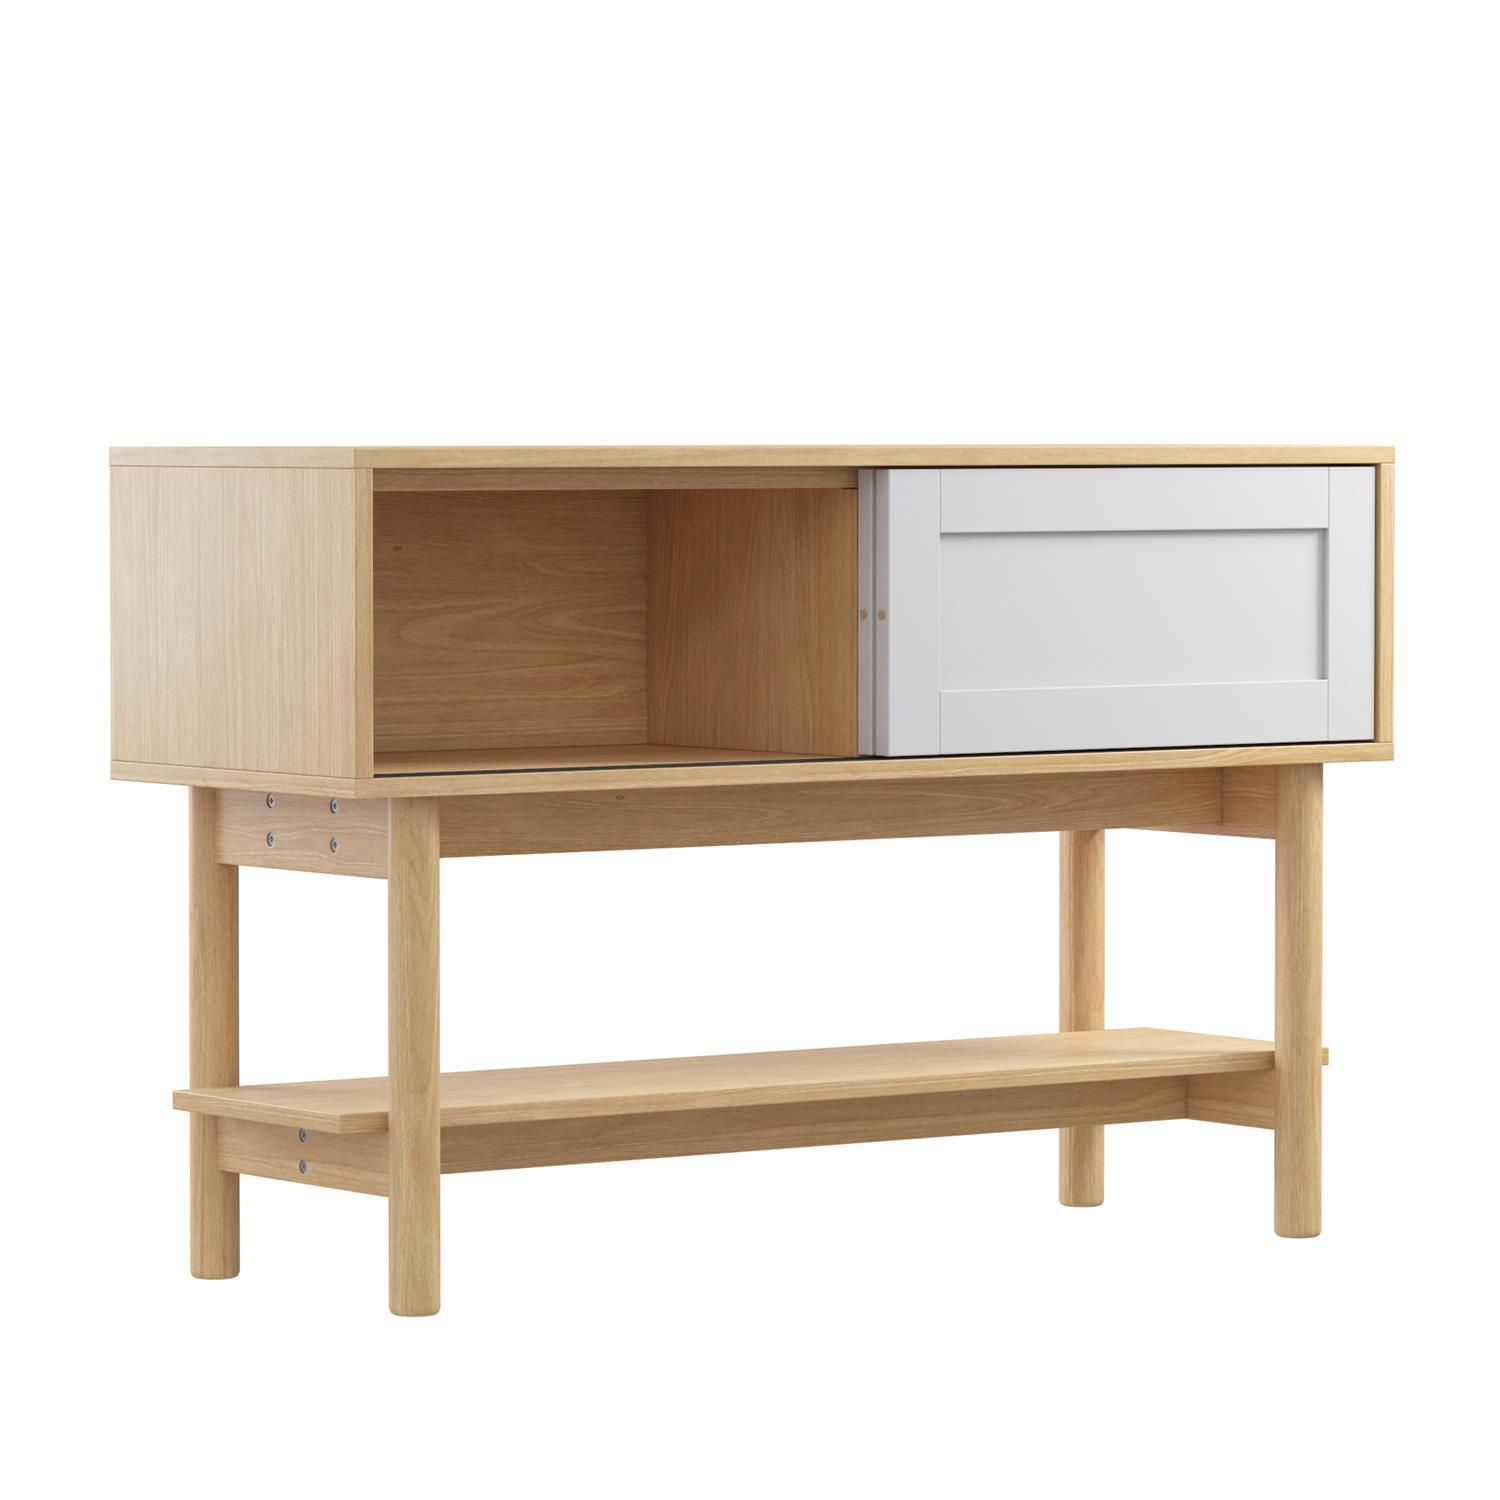 Image for Dorel Living Venetta Modern Wood Storage Console at Kohl's.